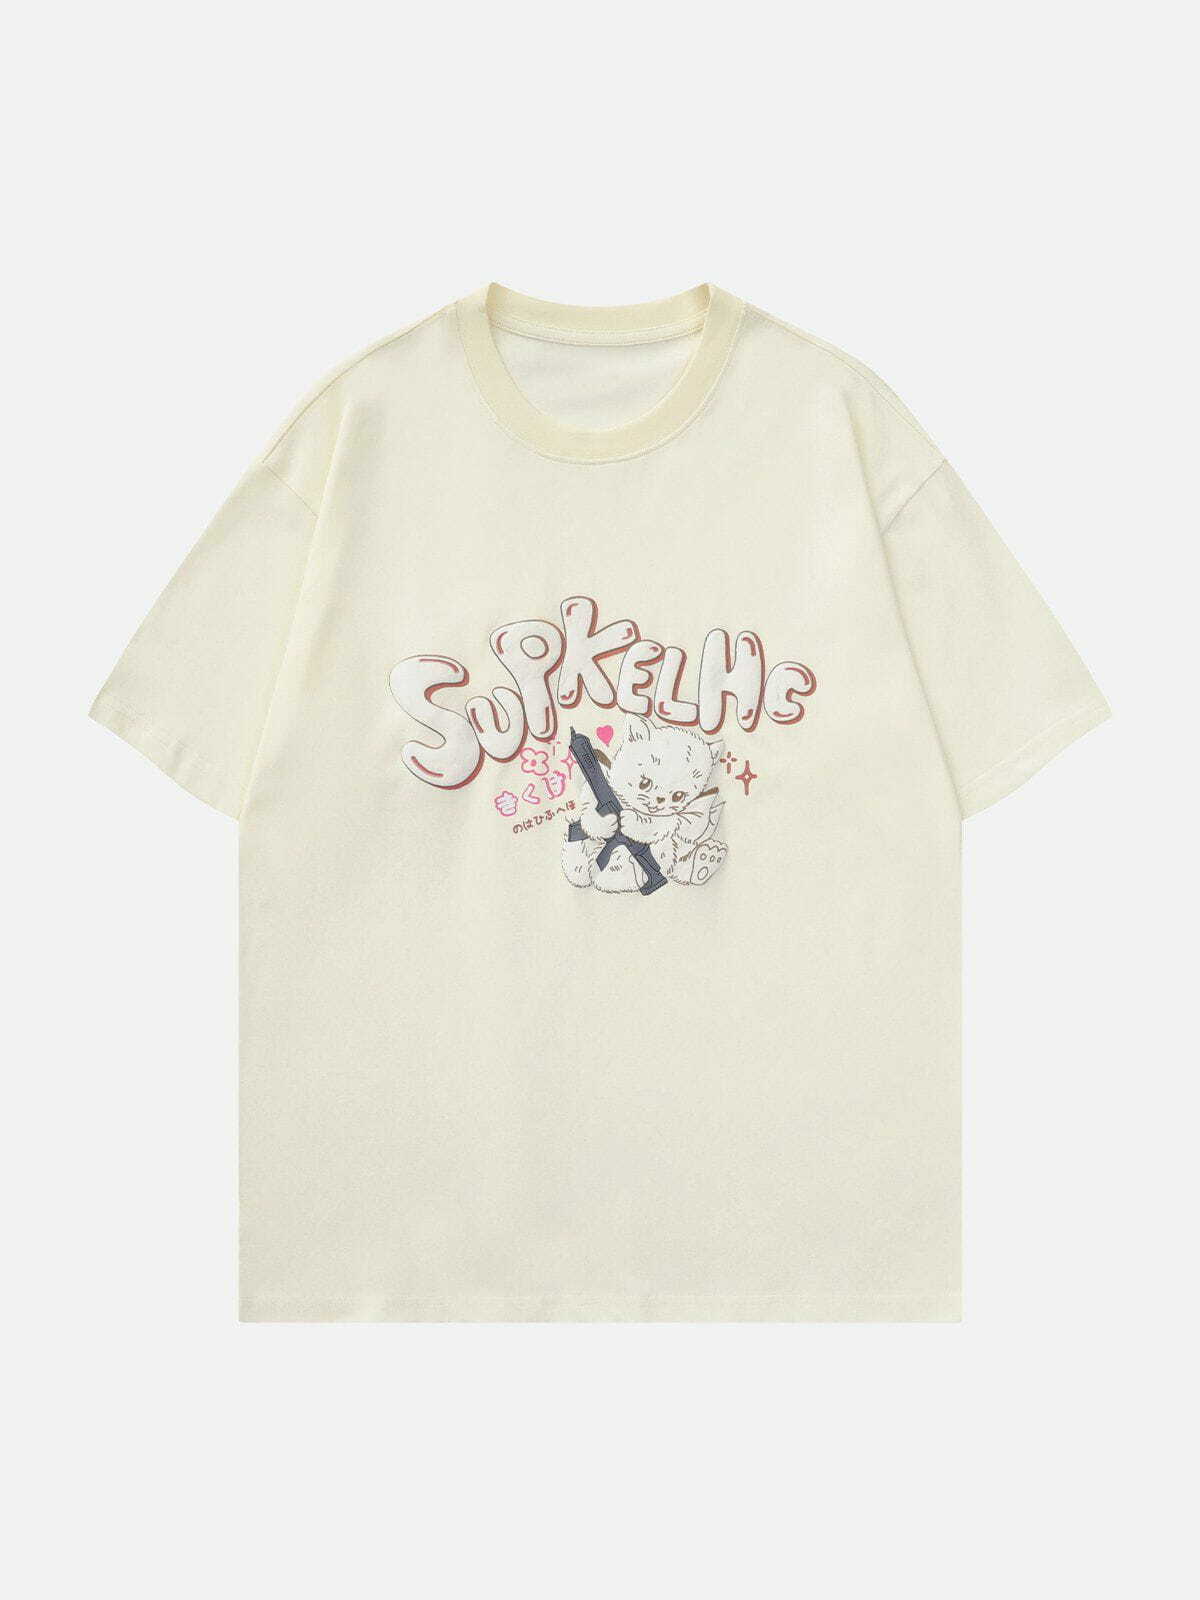 retro cat print tee edgy  vibrant streetwear shirt 3328